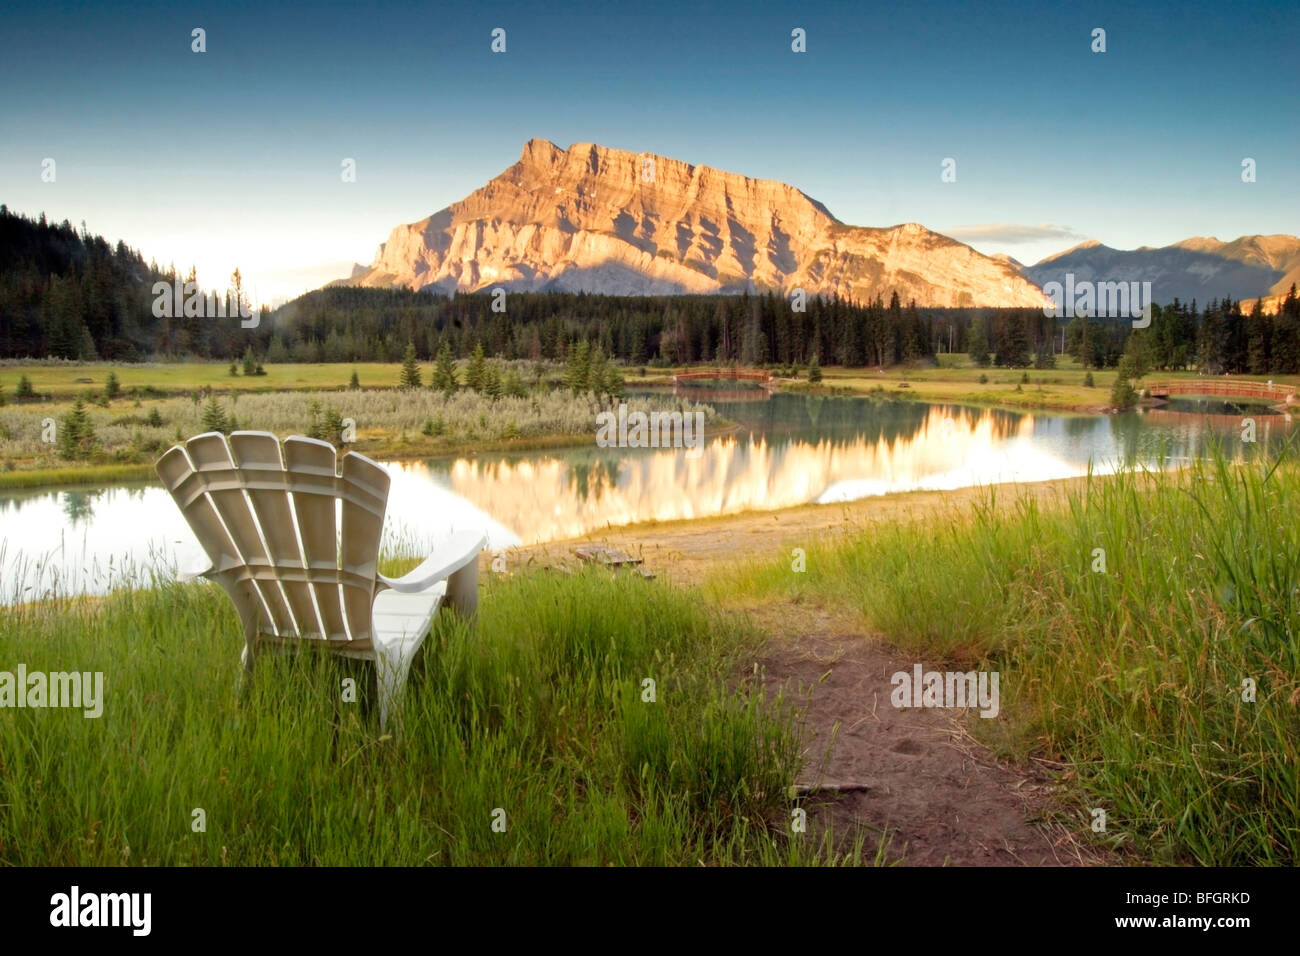 Stuhl mit Blick auf Teich Kaskade und Rundle Mountain. Banff Nationalpark, Alberta, Kanada Stockfoto